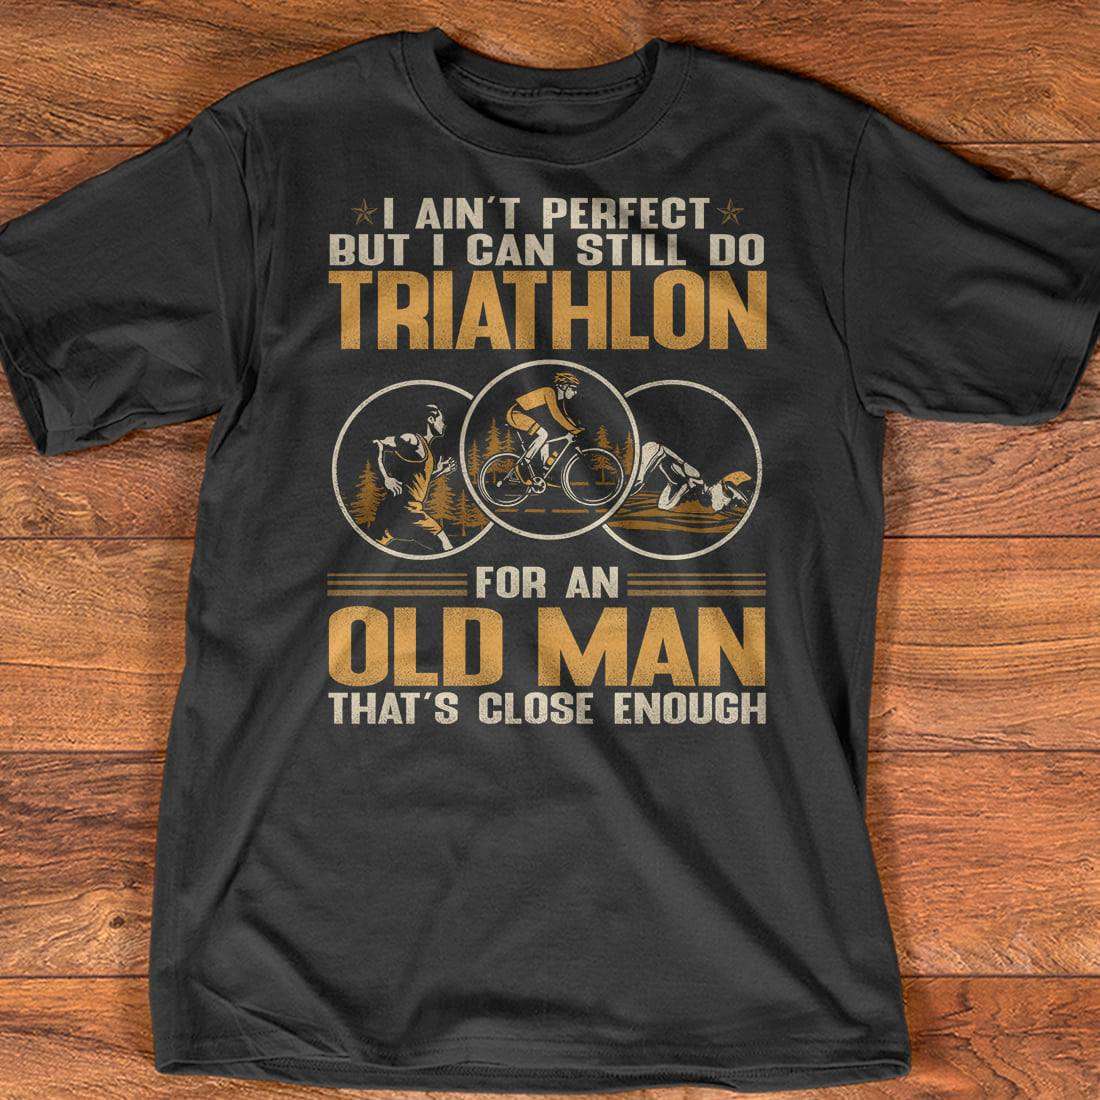 Triathlon Man - I ain't perfect but i can still do triathlon for an old man that's close enough